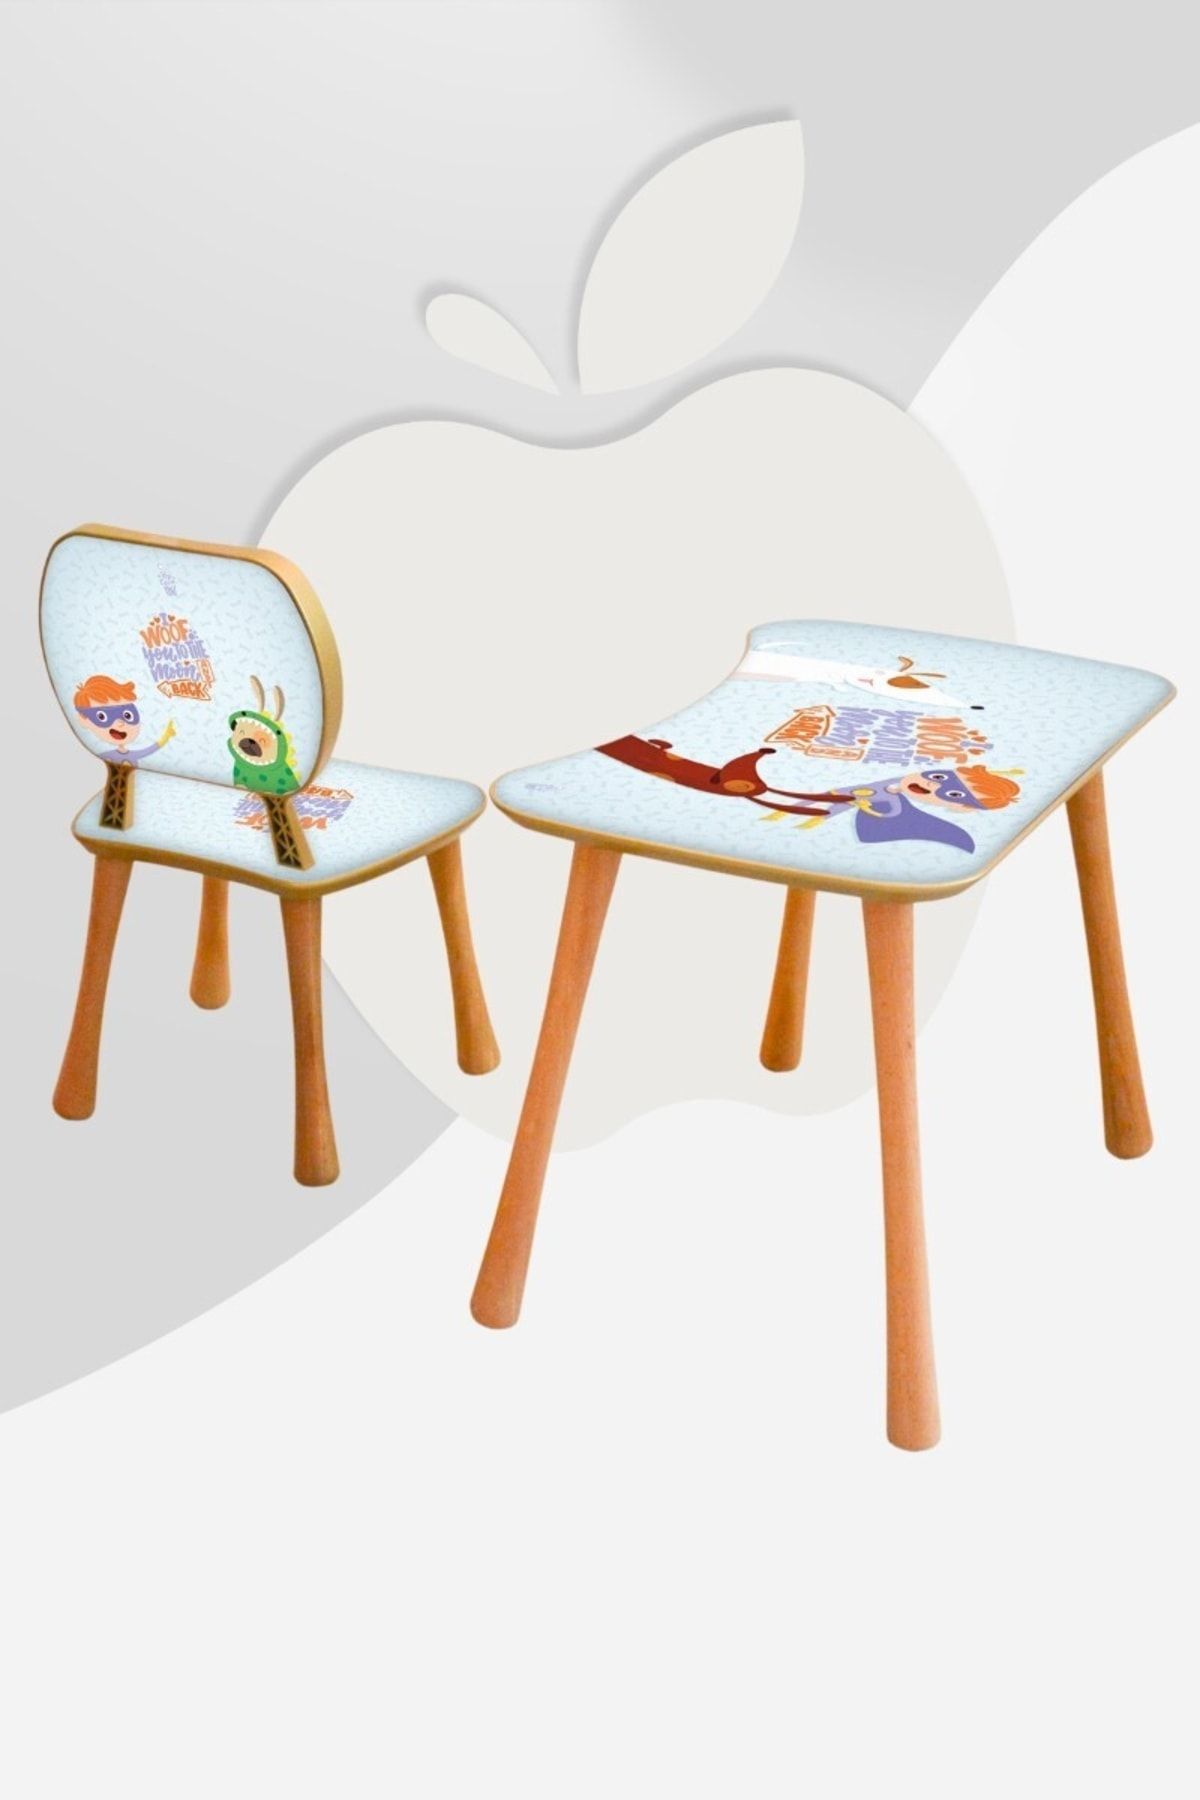 Popcorn Kids Apple Super Hero Sandalyeli Aktivite Masa Seti (2-5 YAŞ)